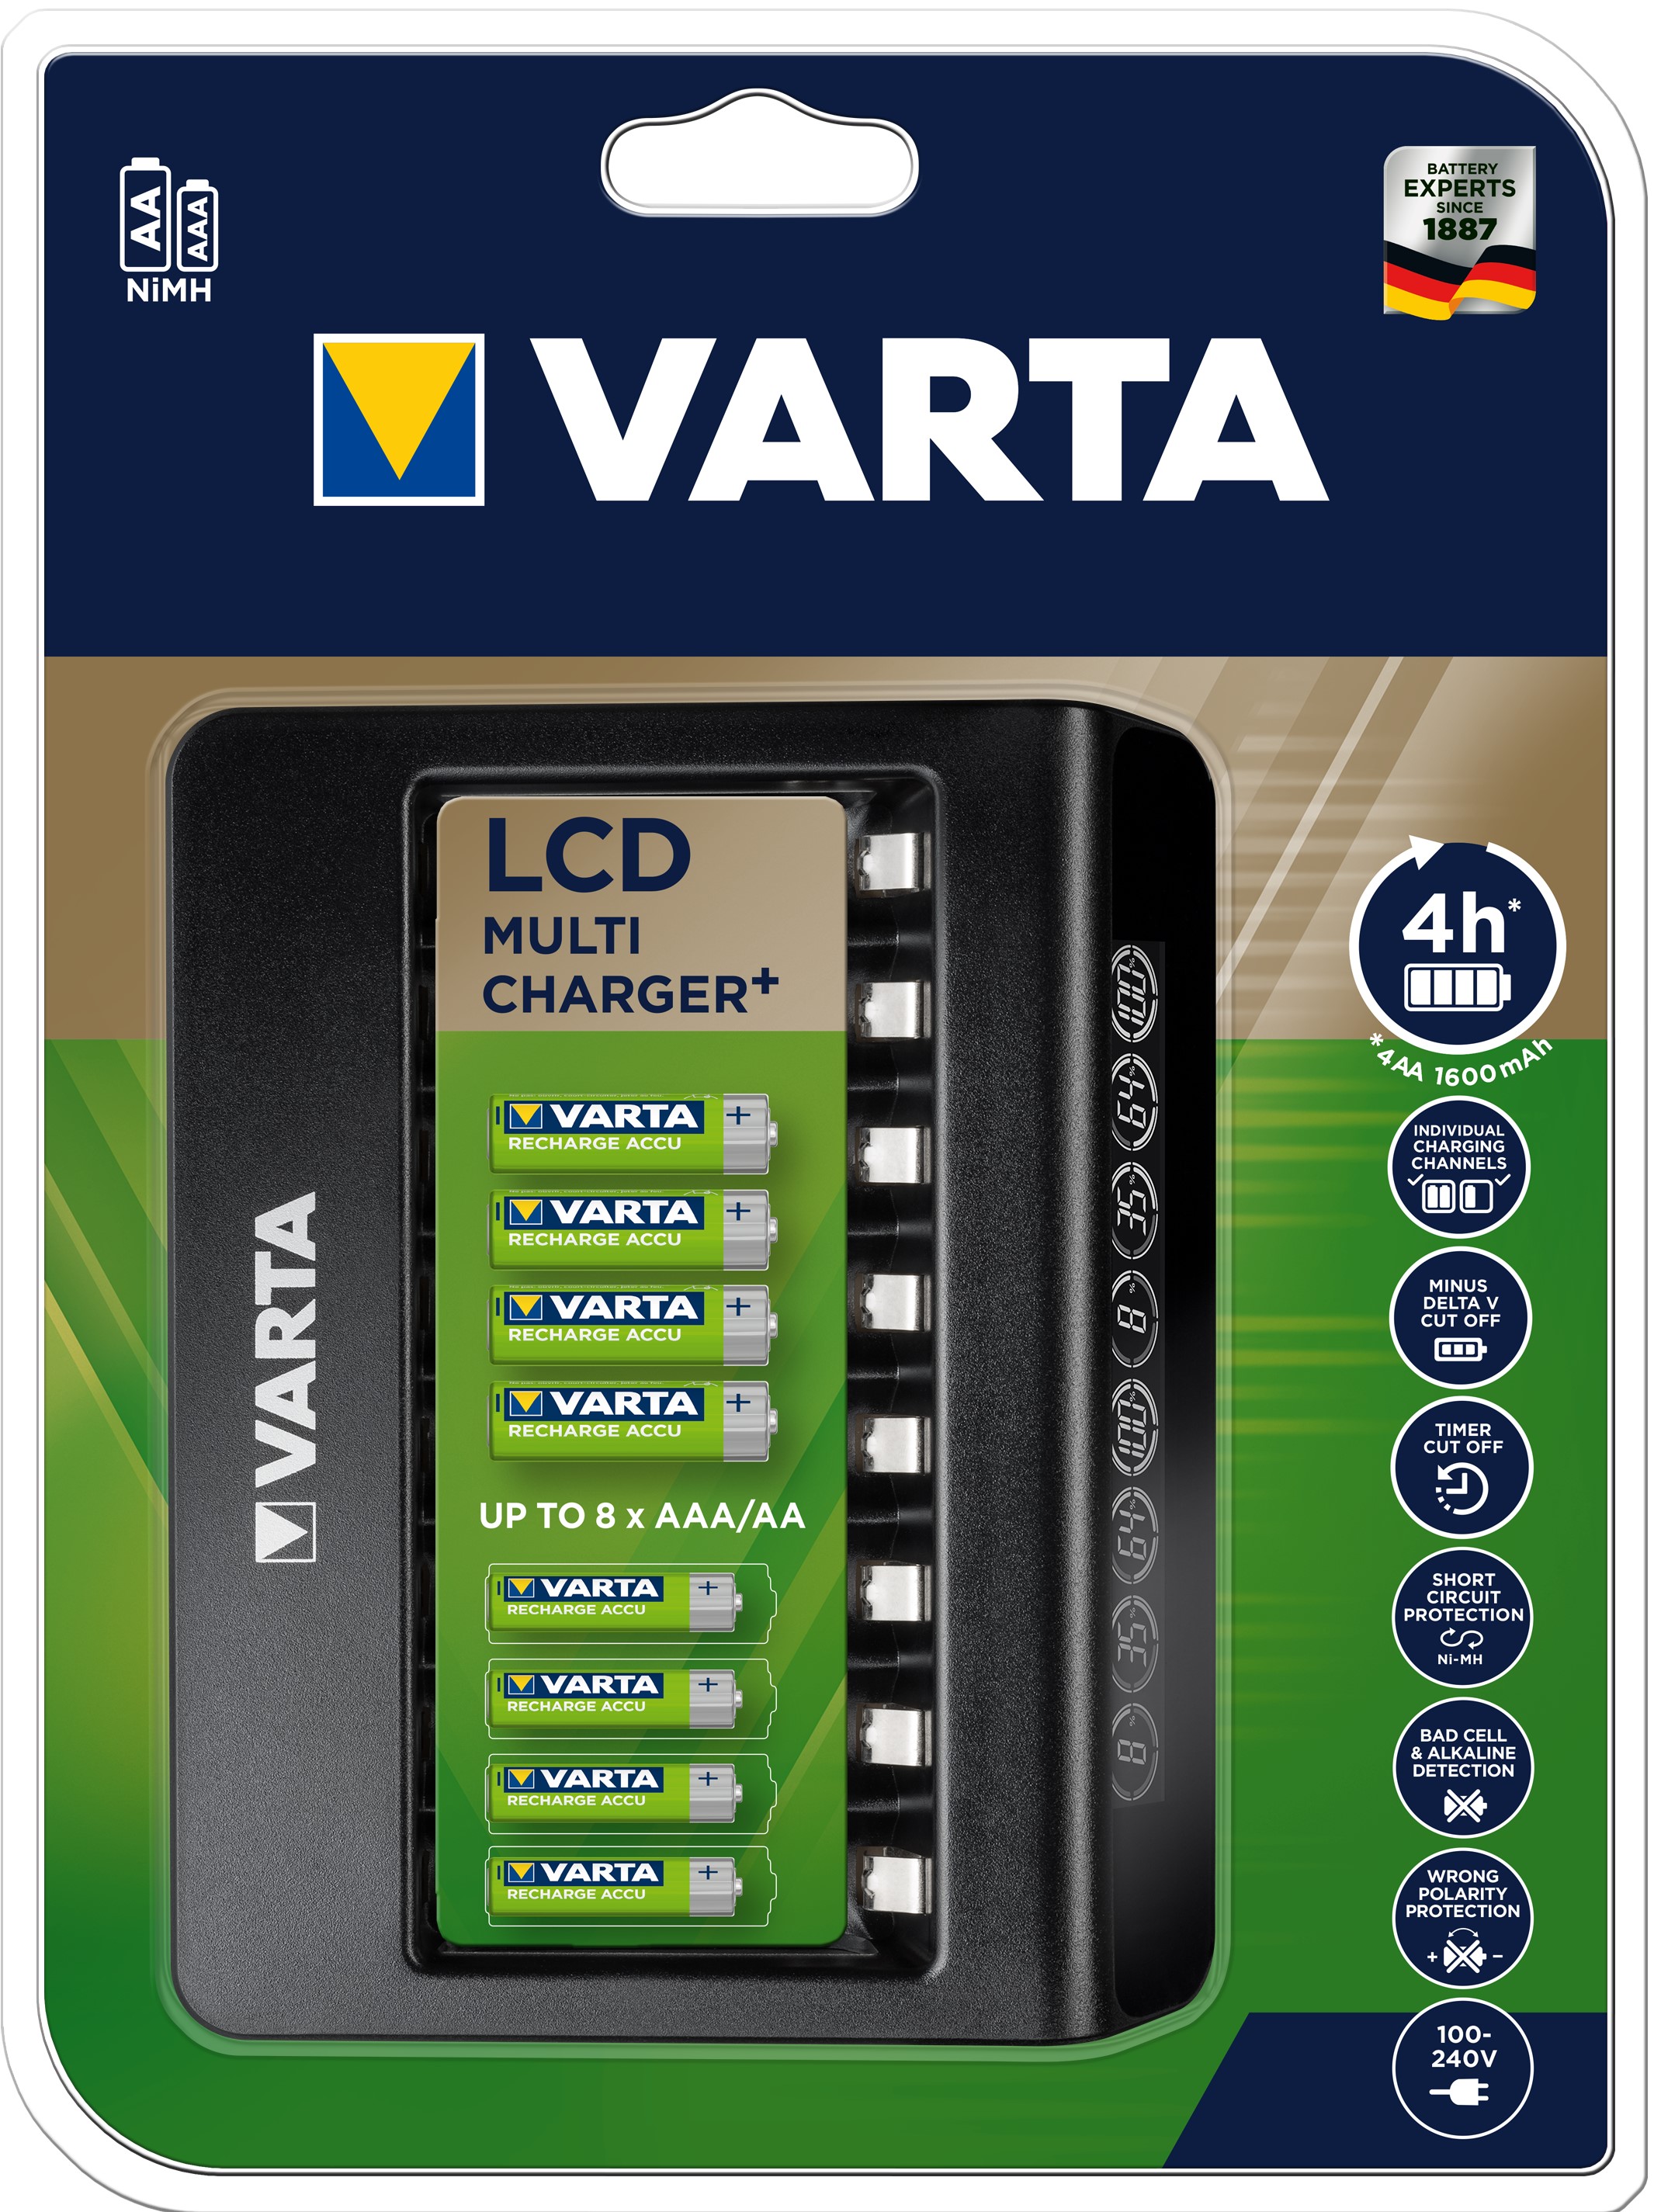 VARTA CHARGEUR LCD 8 canaux sans accu VARTA